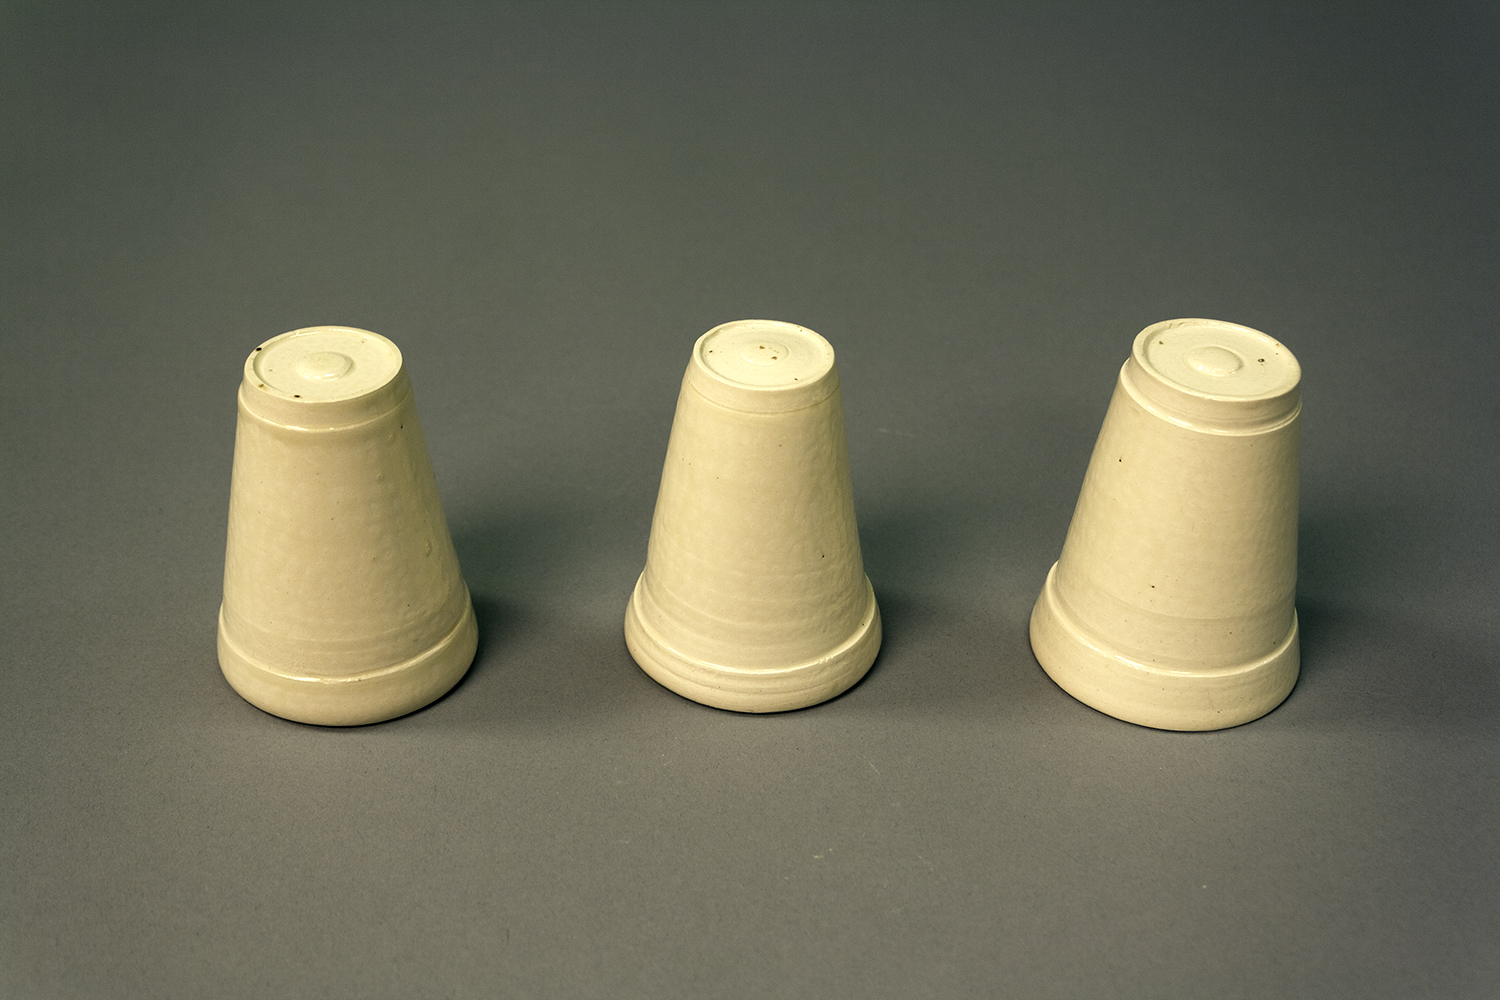 3 styrofoam cups made of ceramics, upside down